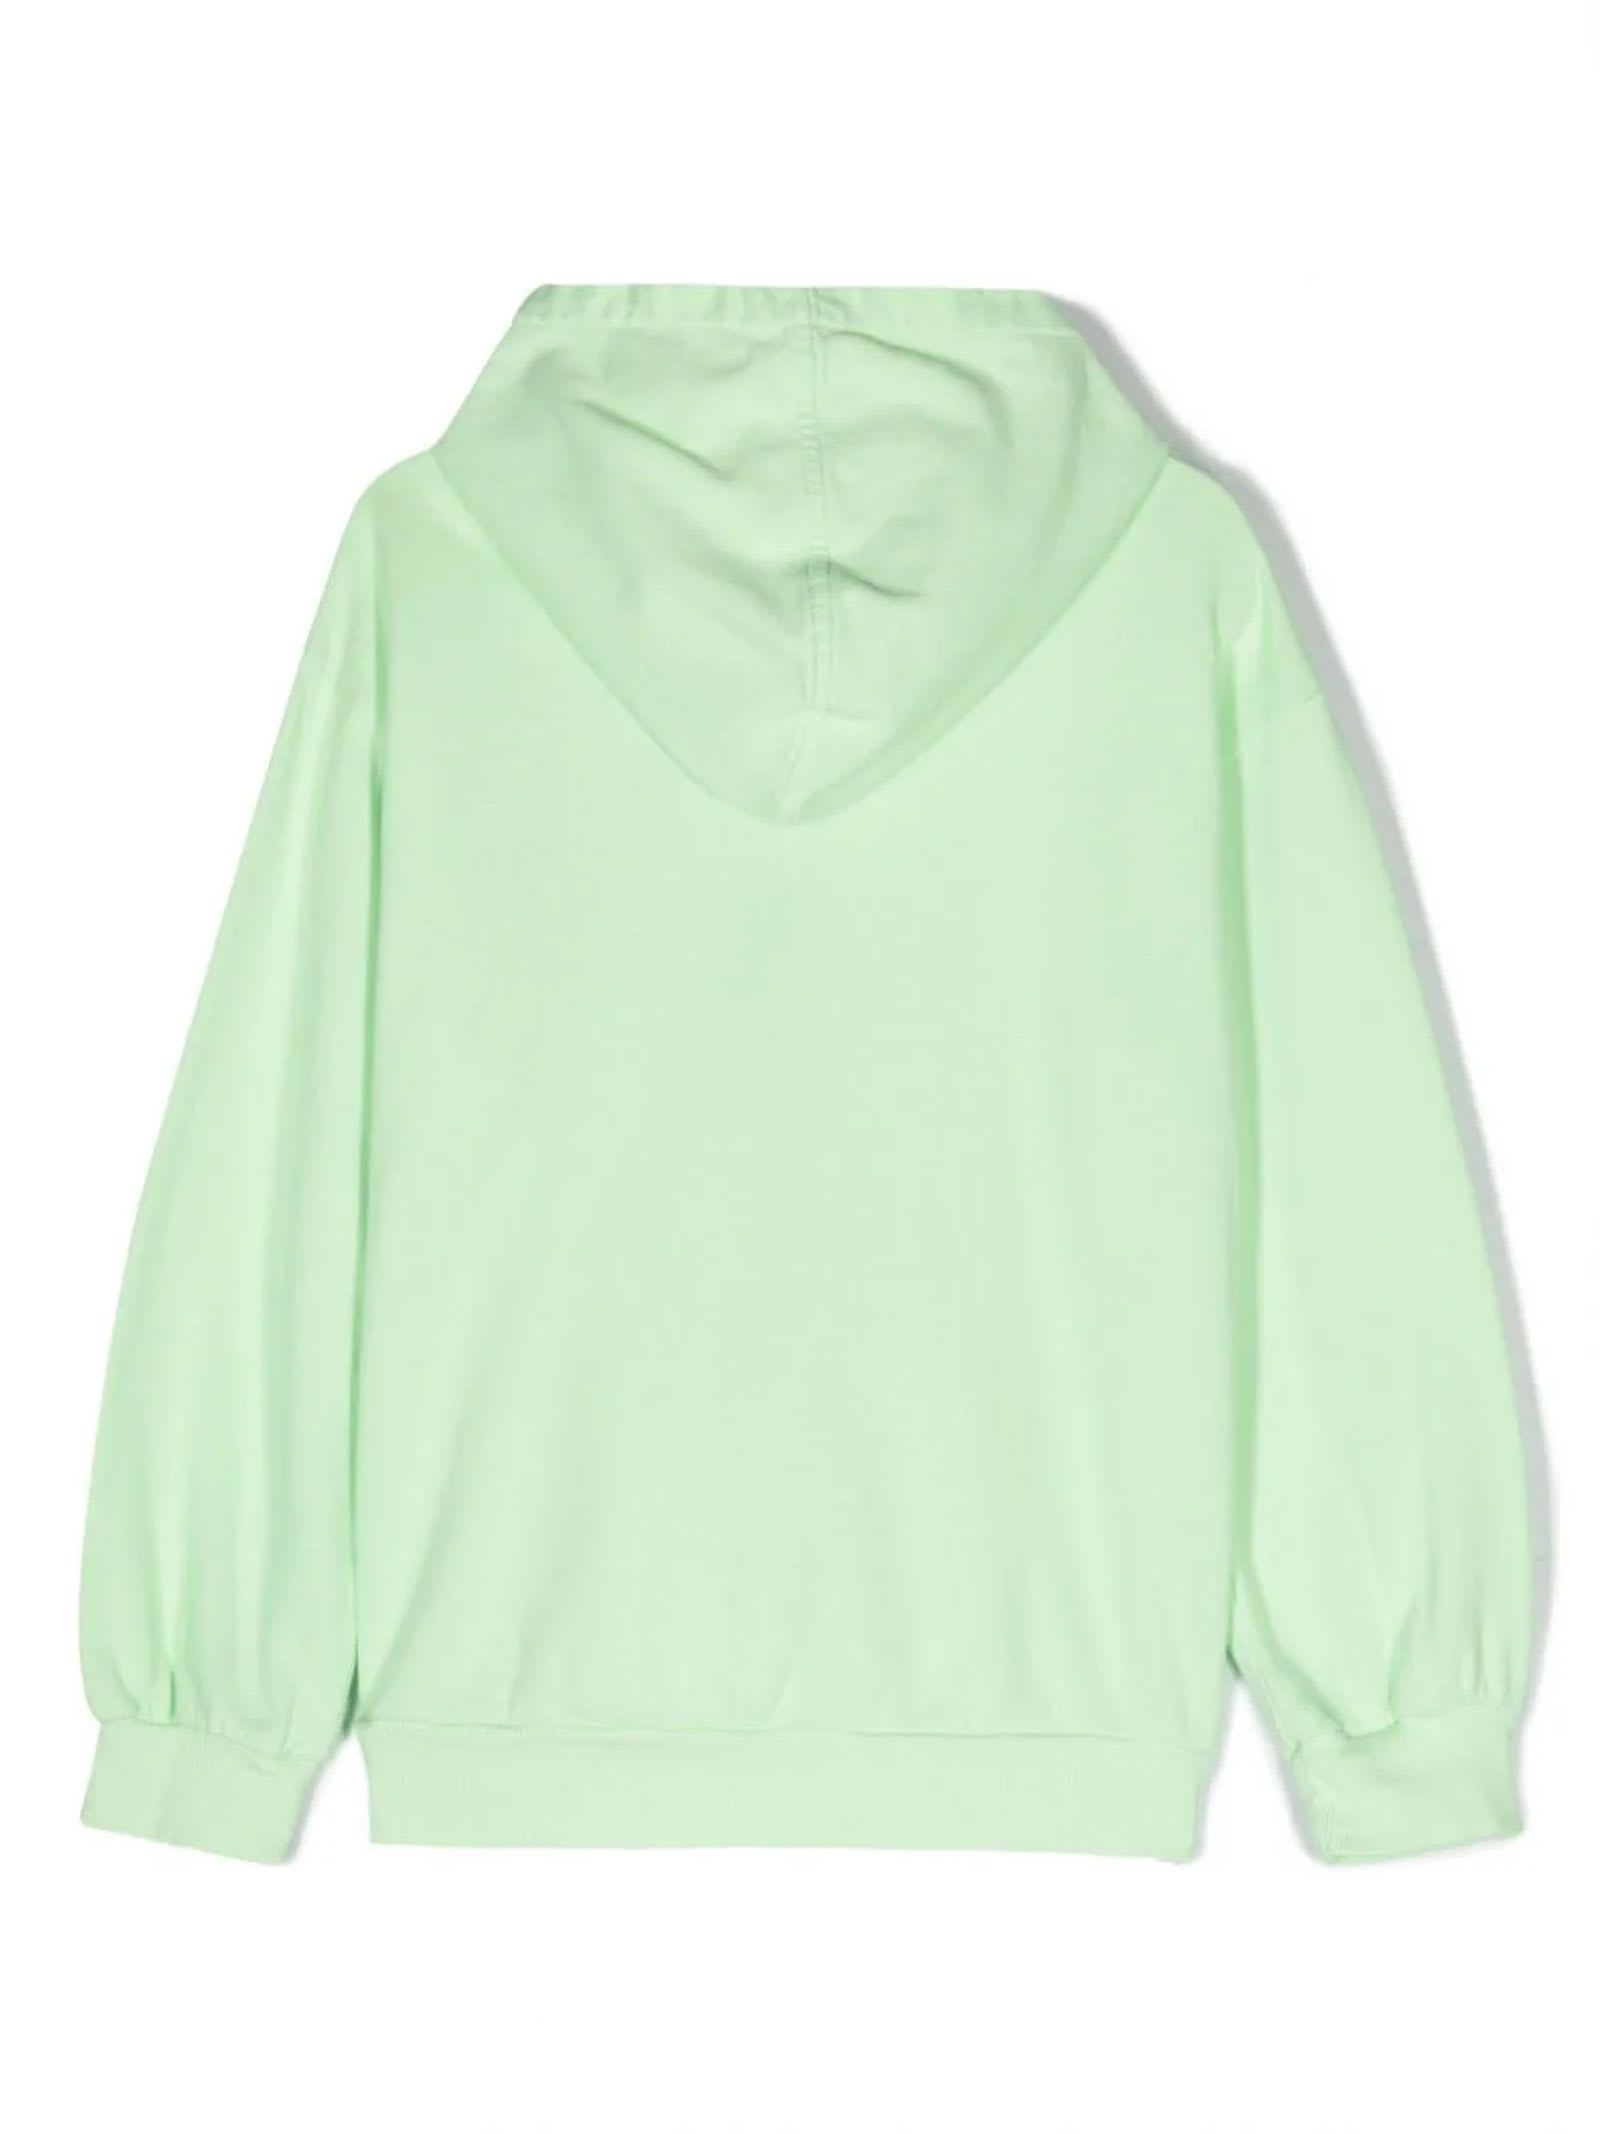 Shop Bobo Choses Sweaters Green